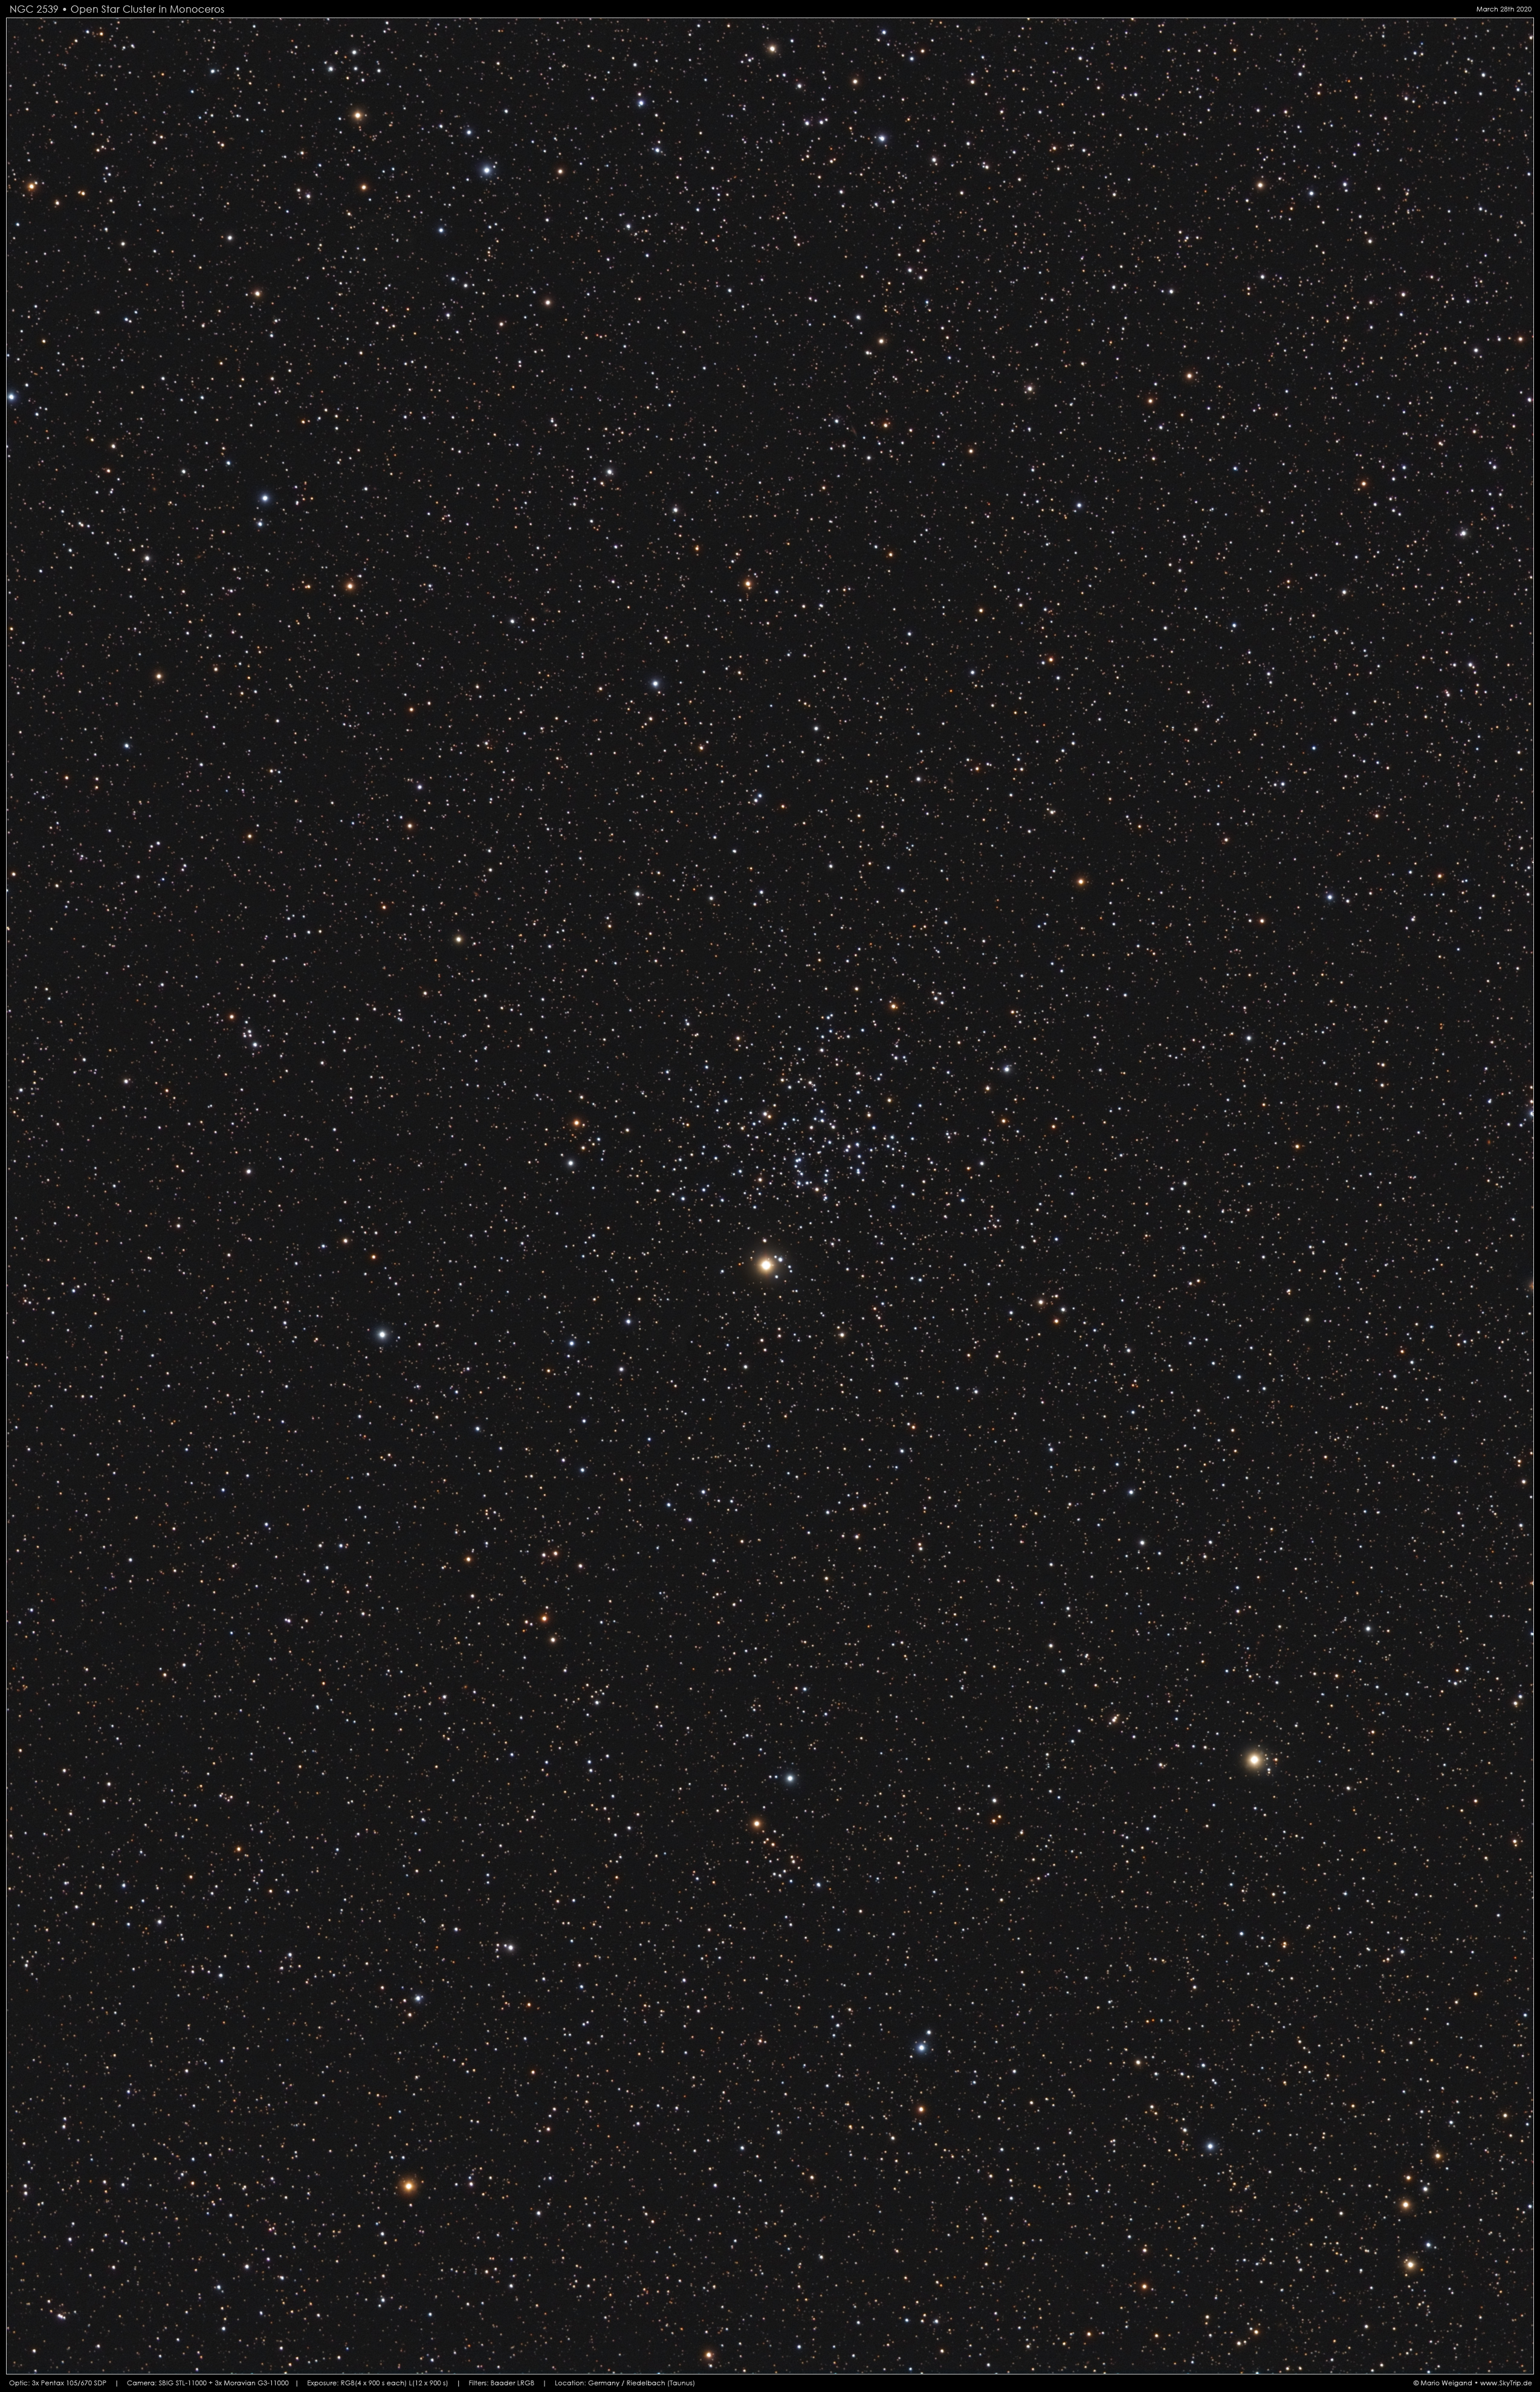 NGC 2539 in Puppis